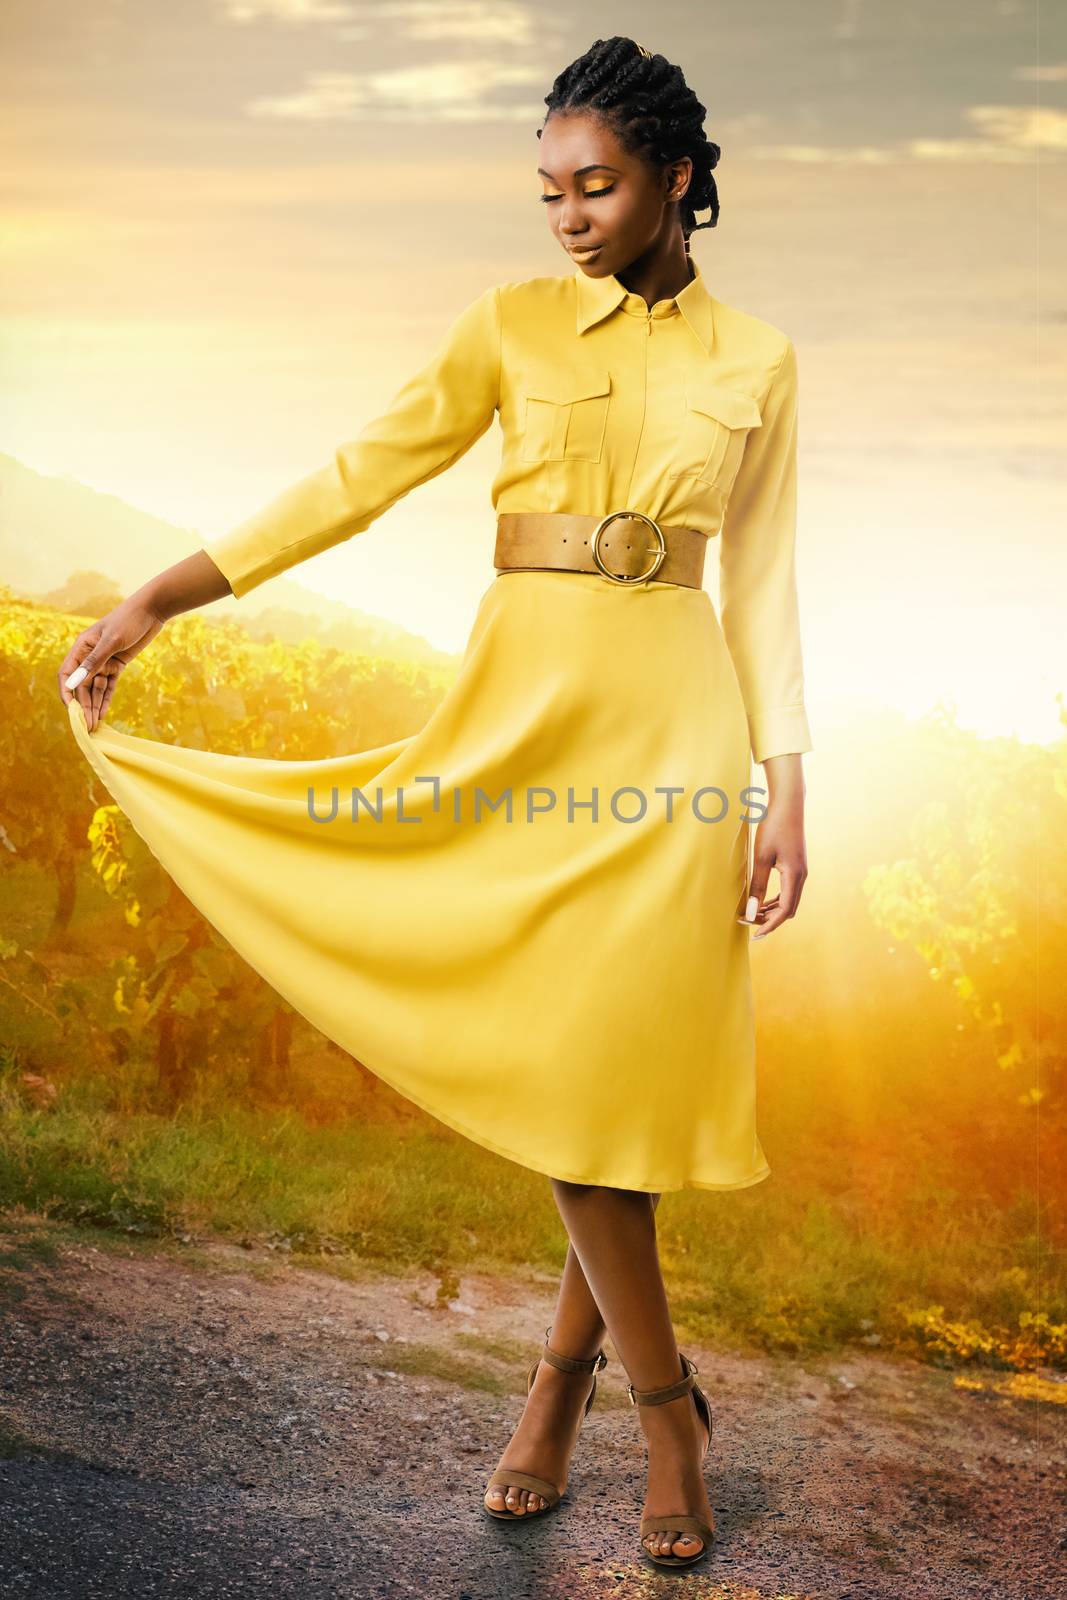 Attractive black girl wearing stylish yellow dress in vineyard. by karelnoppe